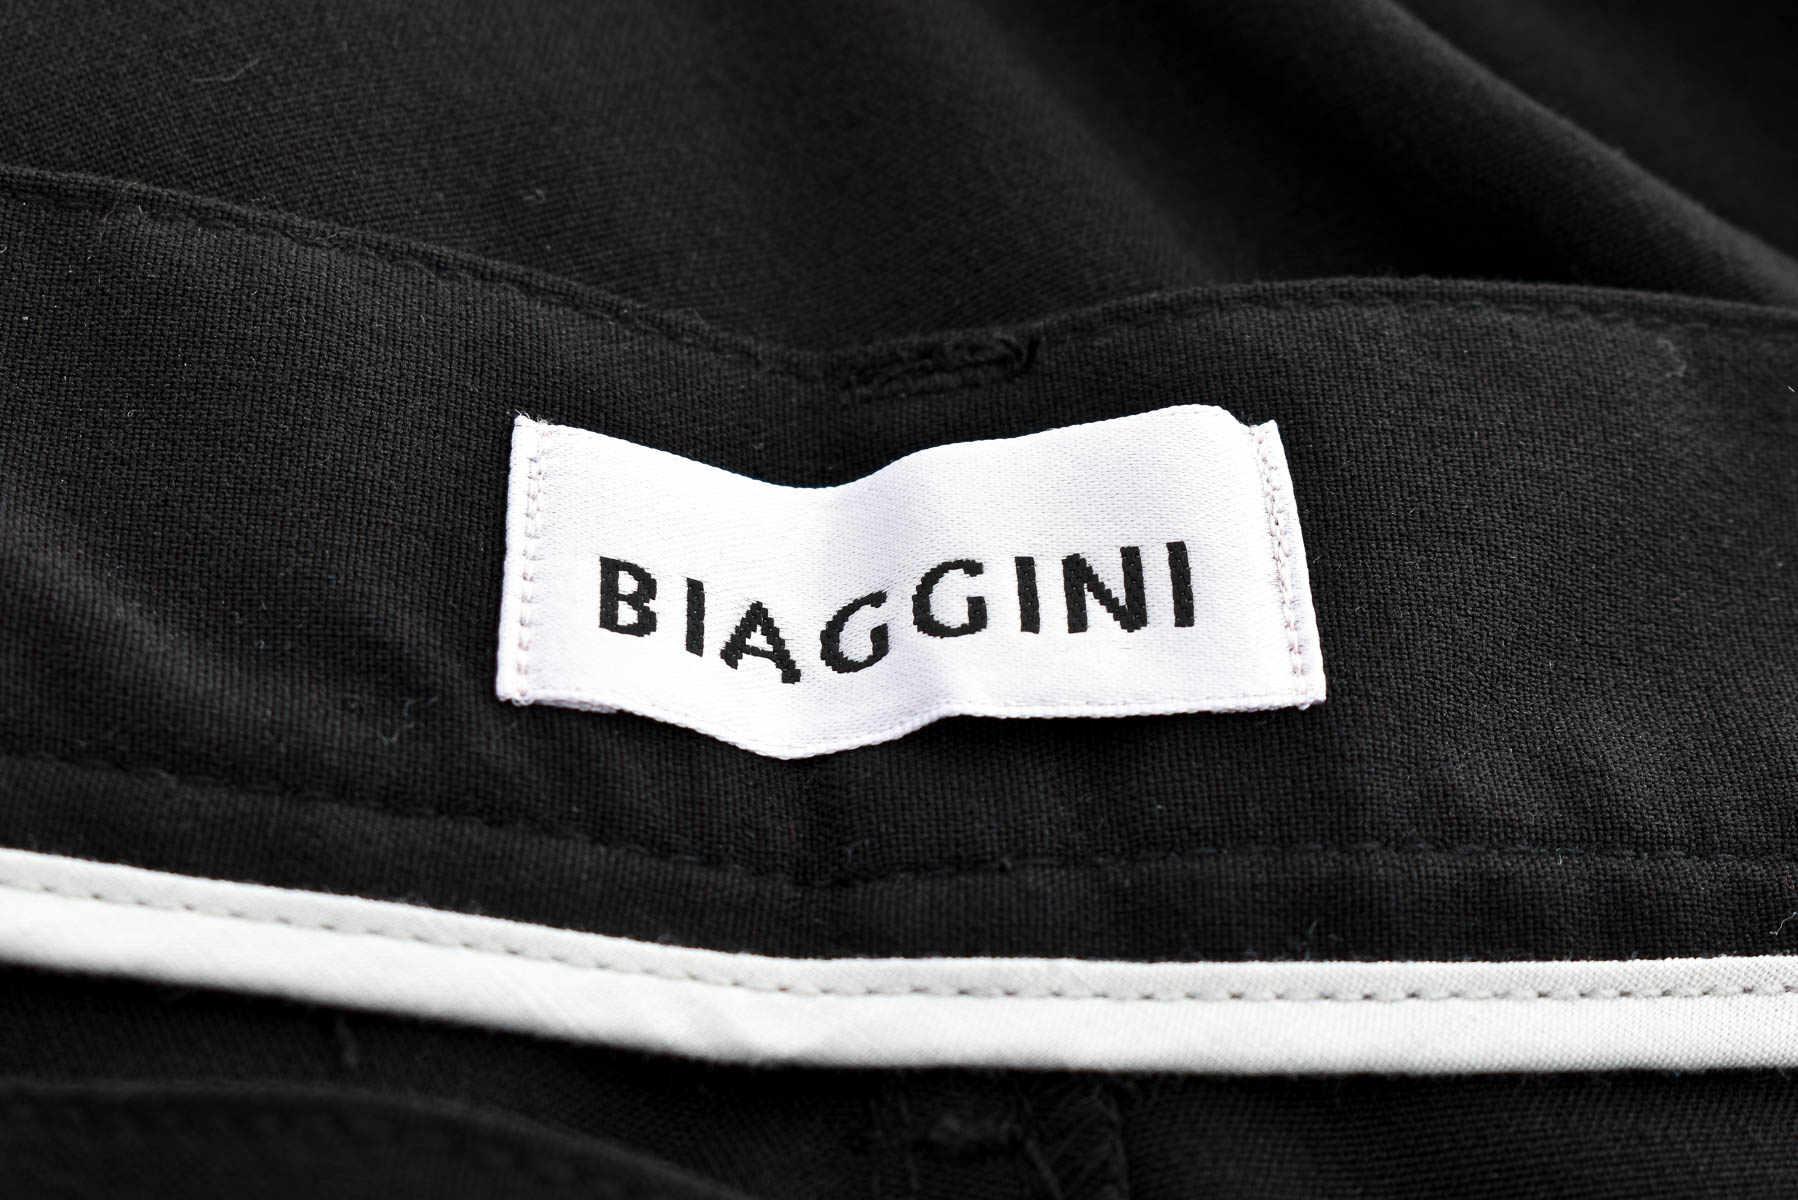 Men's trousers - BIAGGINI - 2